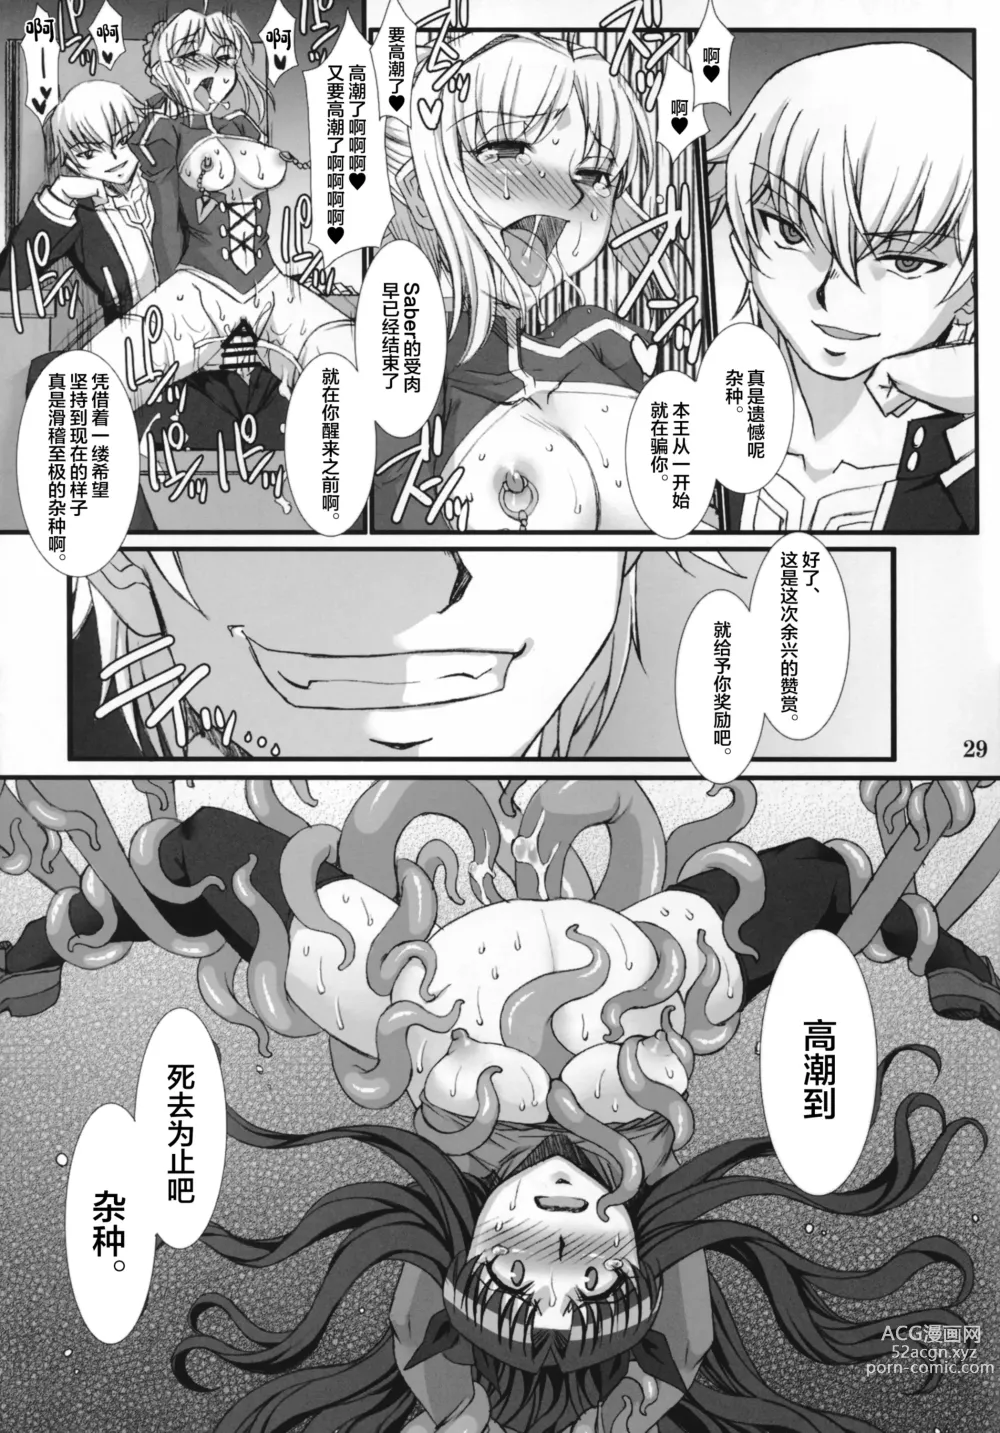 Page 29 of doujinshi Rin Kai -Kegasareta Aka-